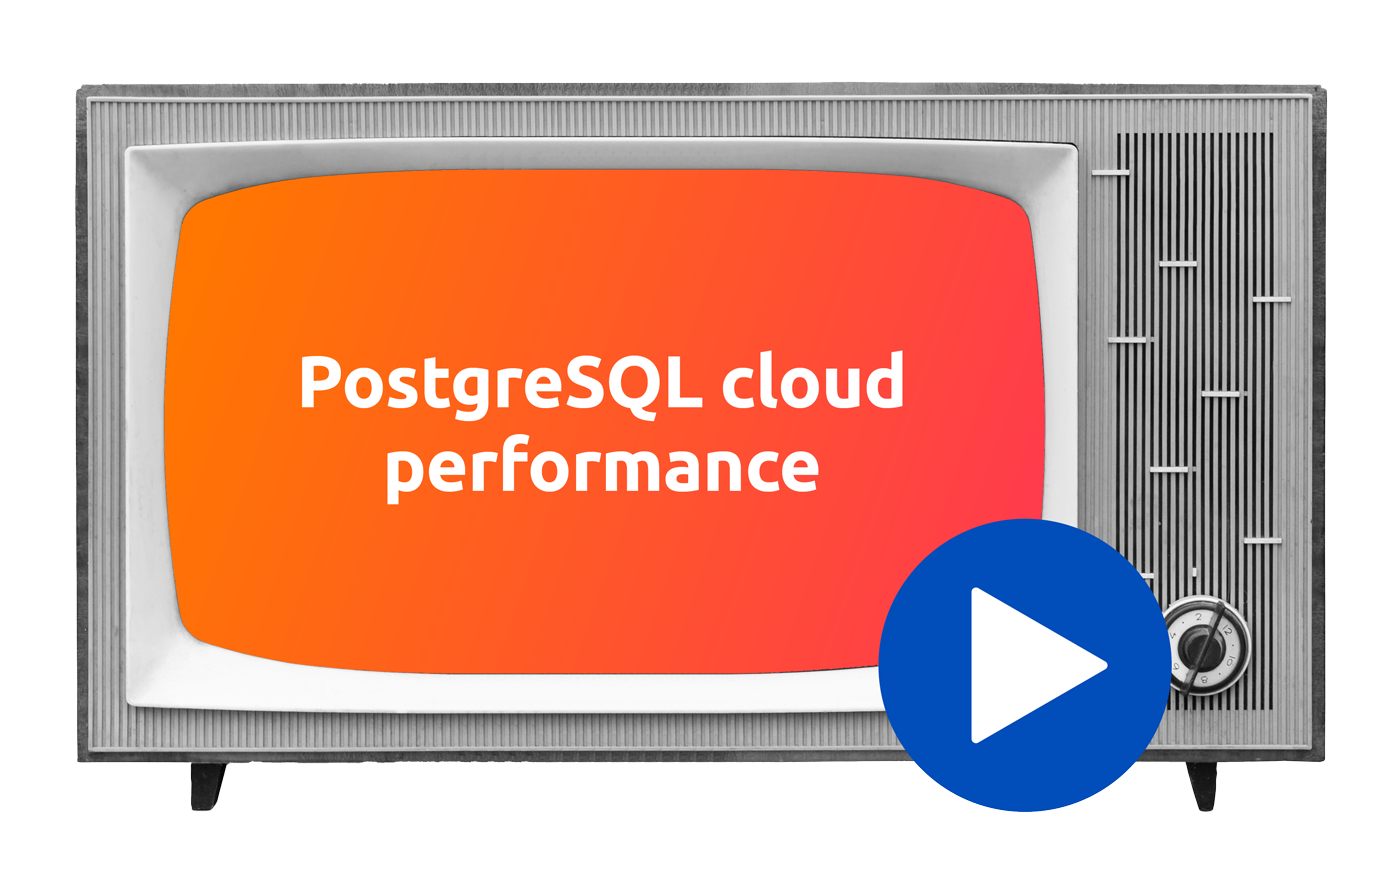 PostgreSQL cloud performance